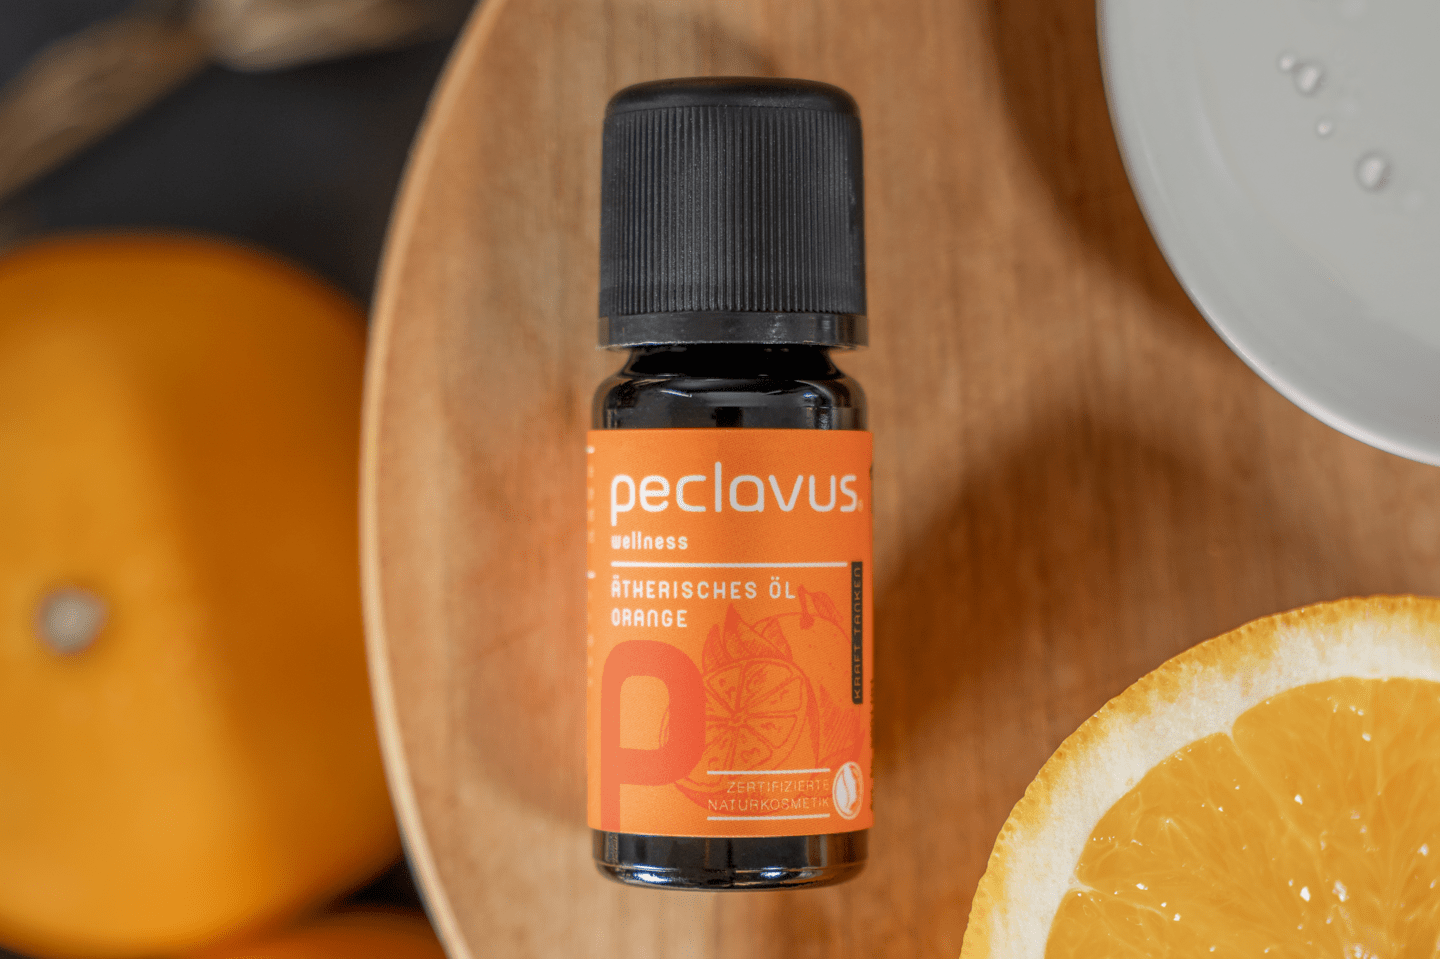 peclavus - Ätherisches Öl Orange, 10 ml